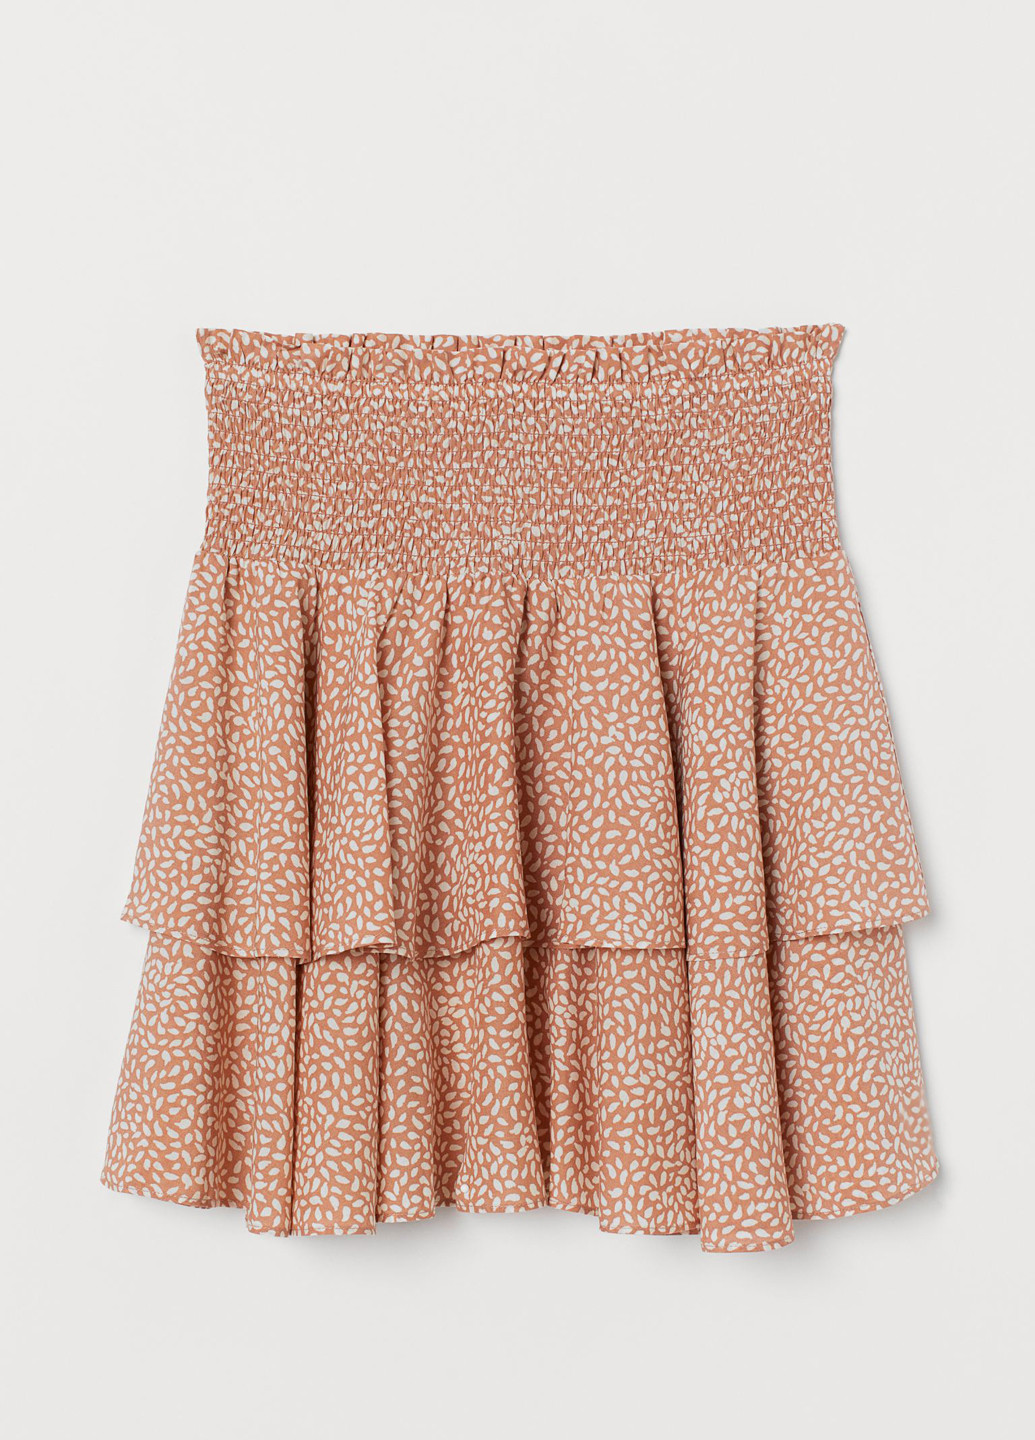 Бежевая кэжуал с абстрактным узором юбка H&M клешированная-солнце